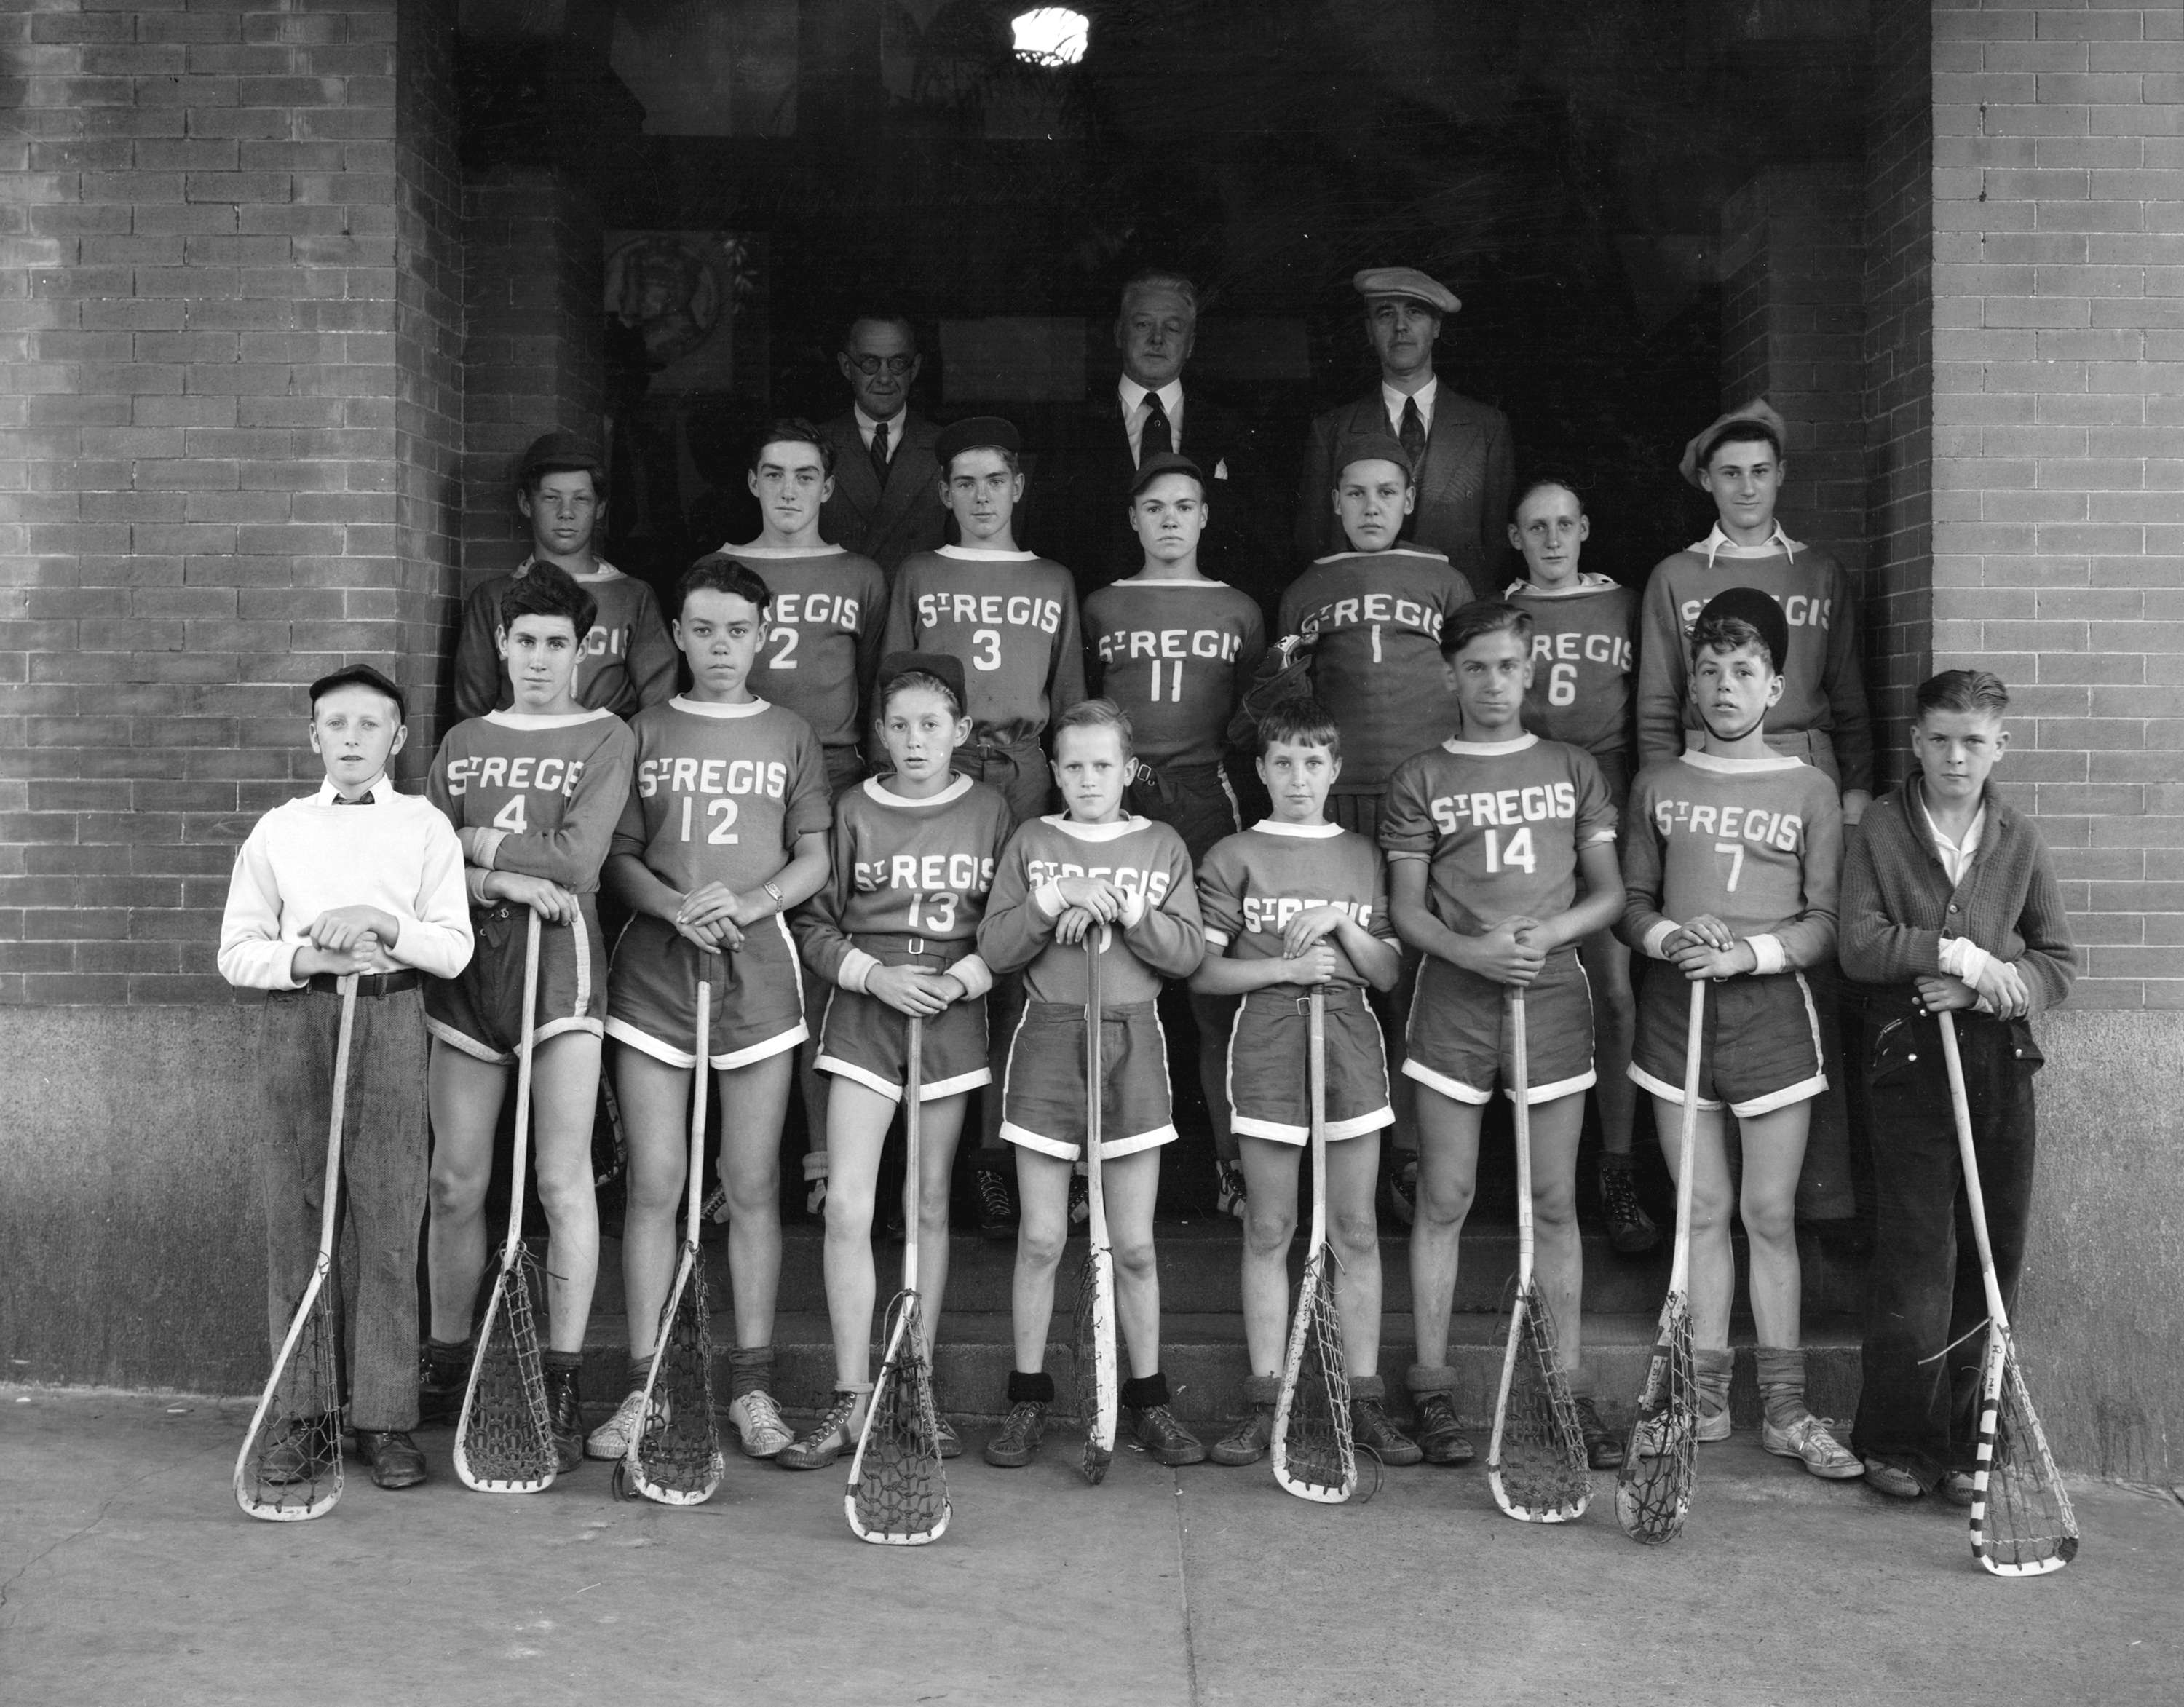 stregis_midgets_lacrosse_team_1935.jpg